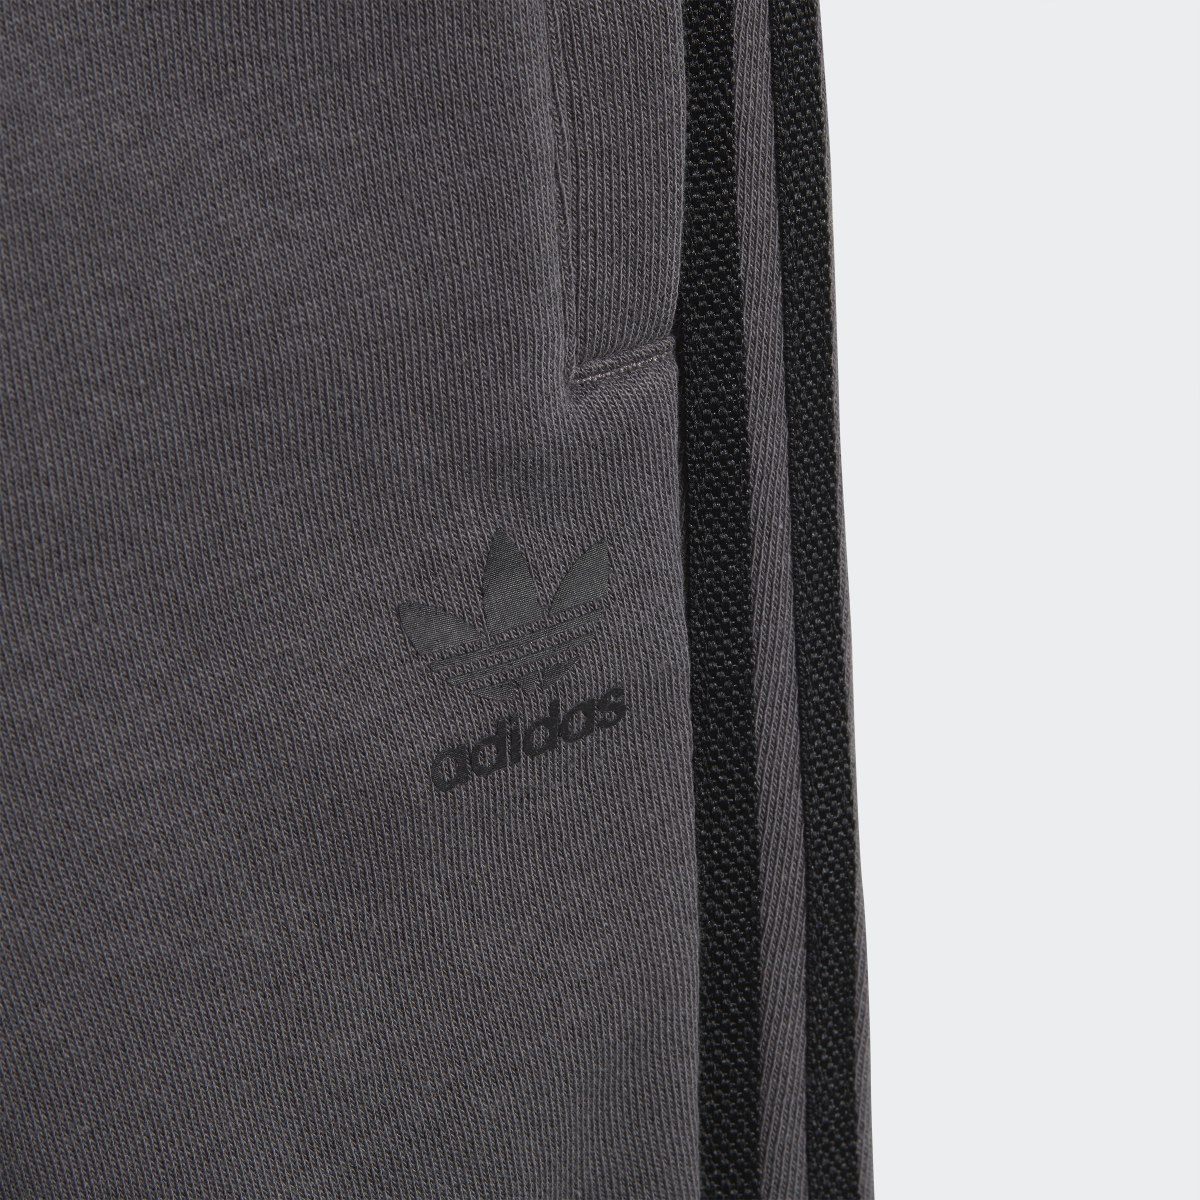 Adidas Crew Sweatshirt Set. 9